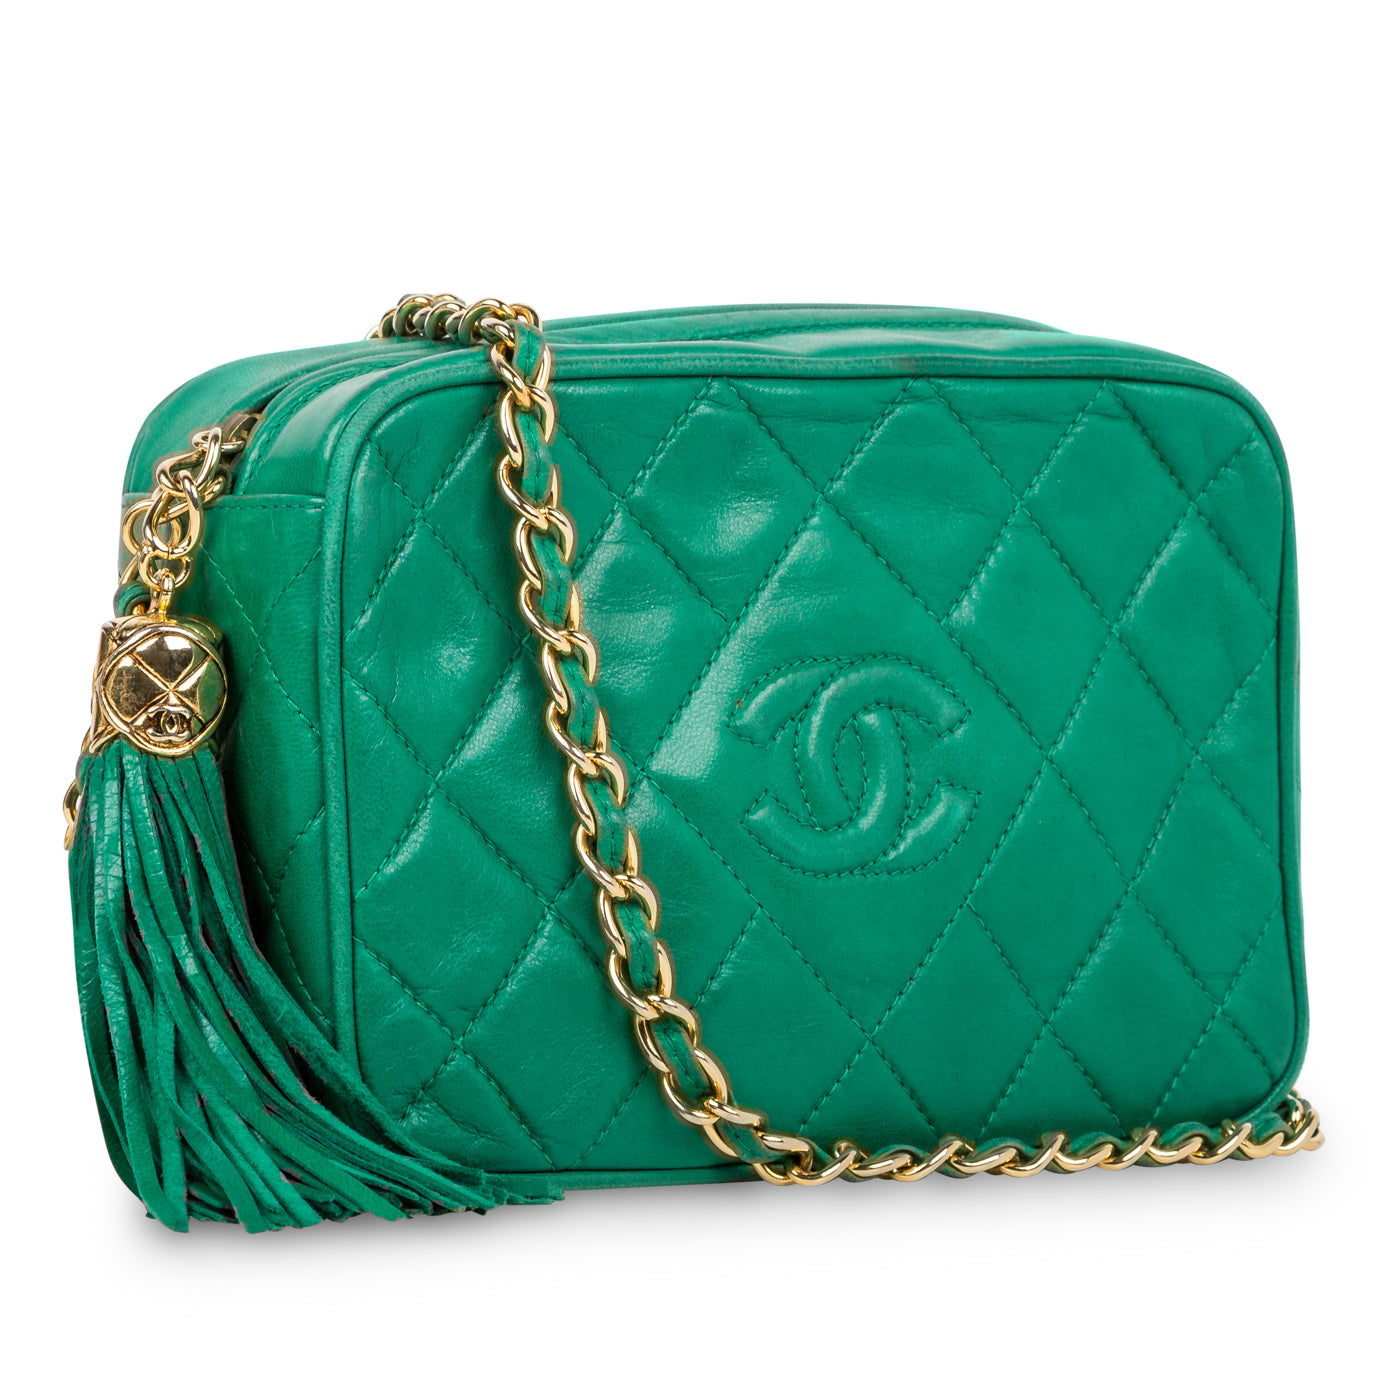 Chanel - Vintage Lambskin Tassel Bag - Emerald Green - Vintage